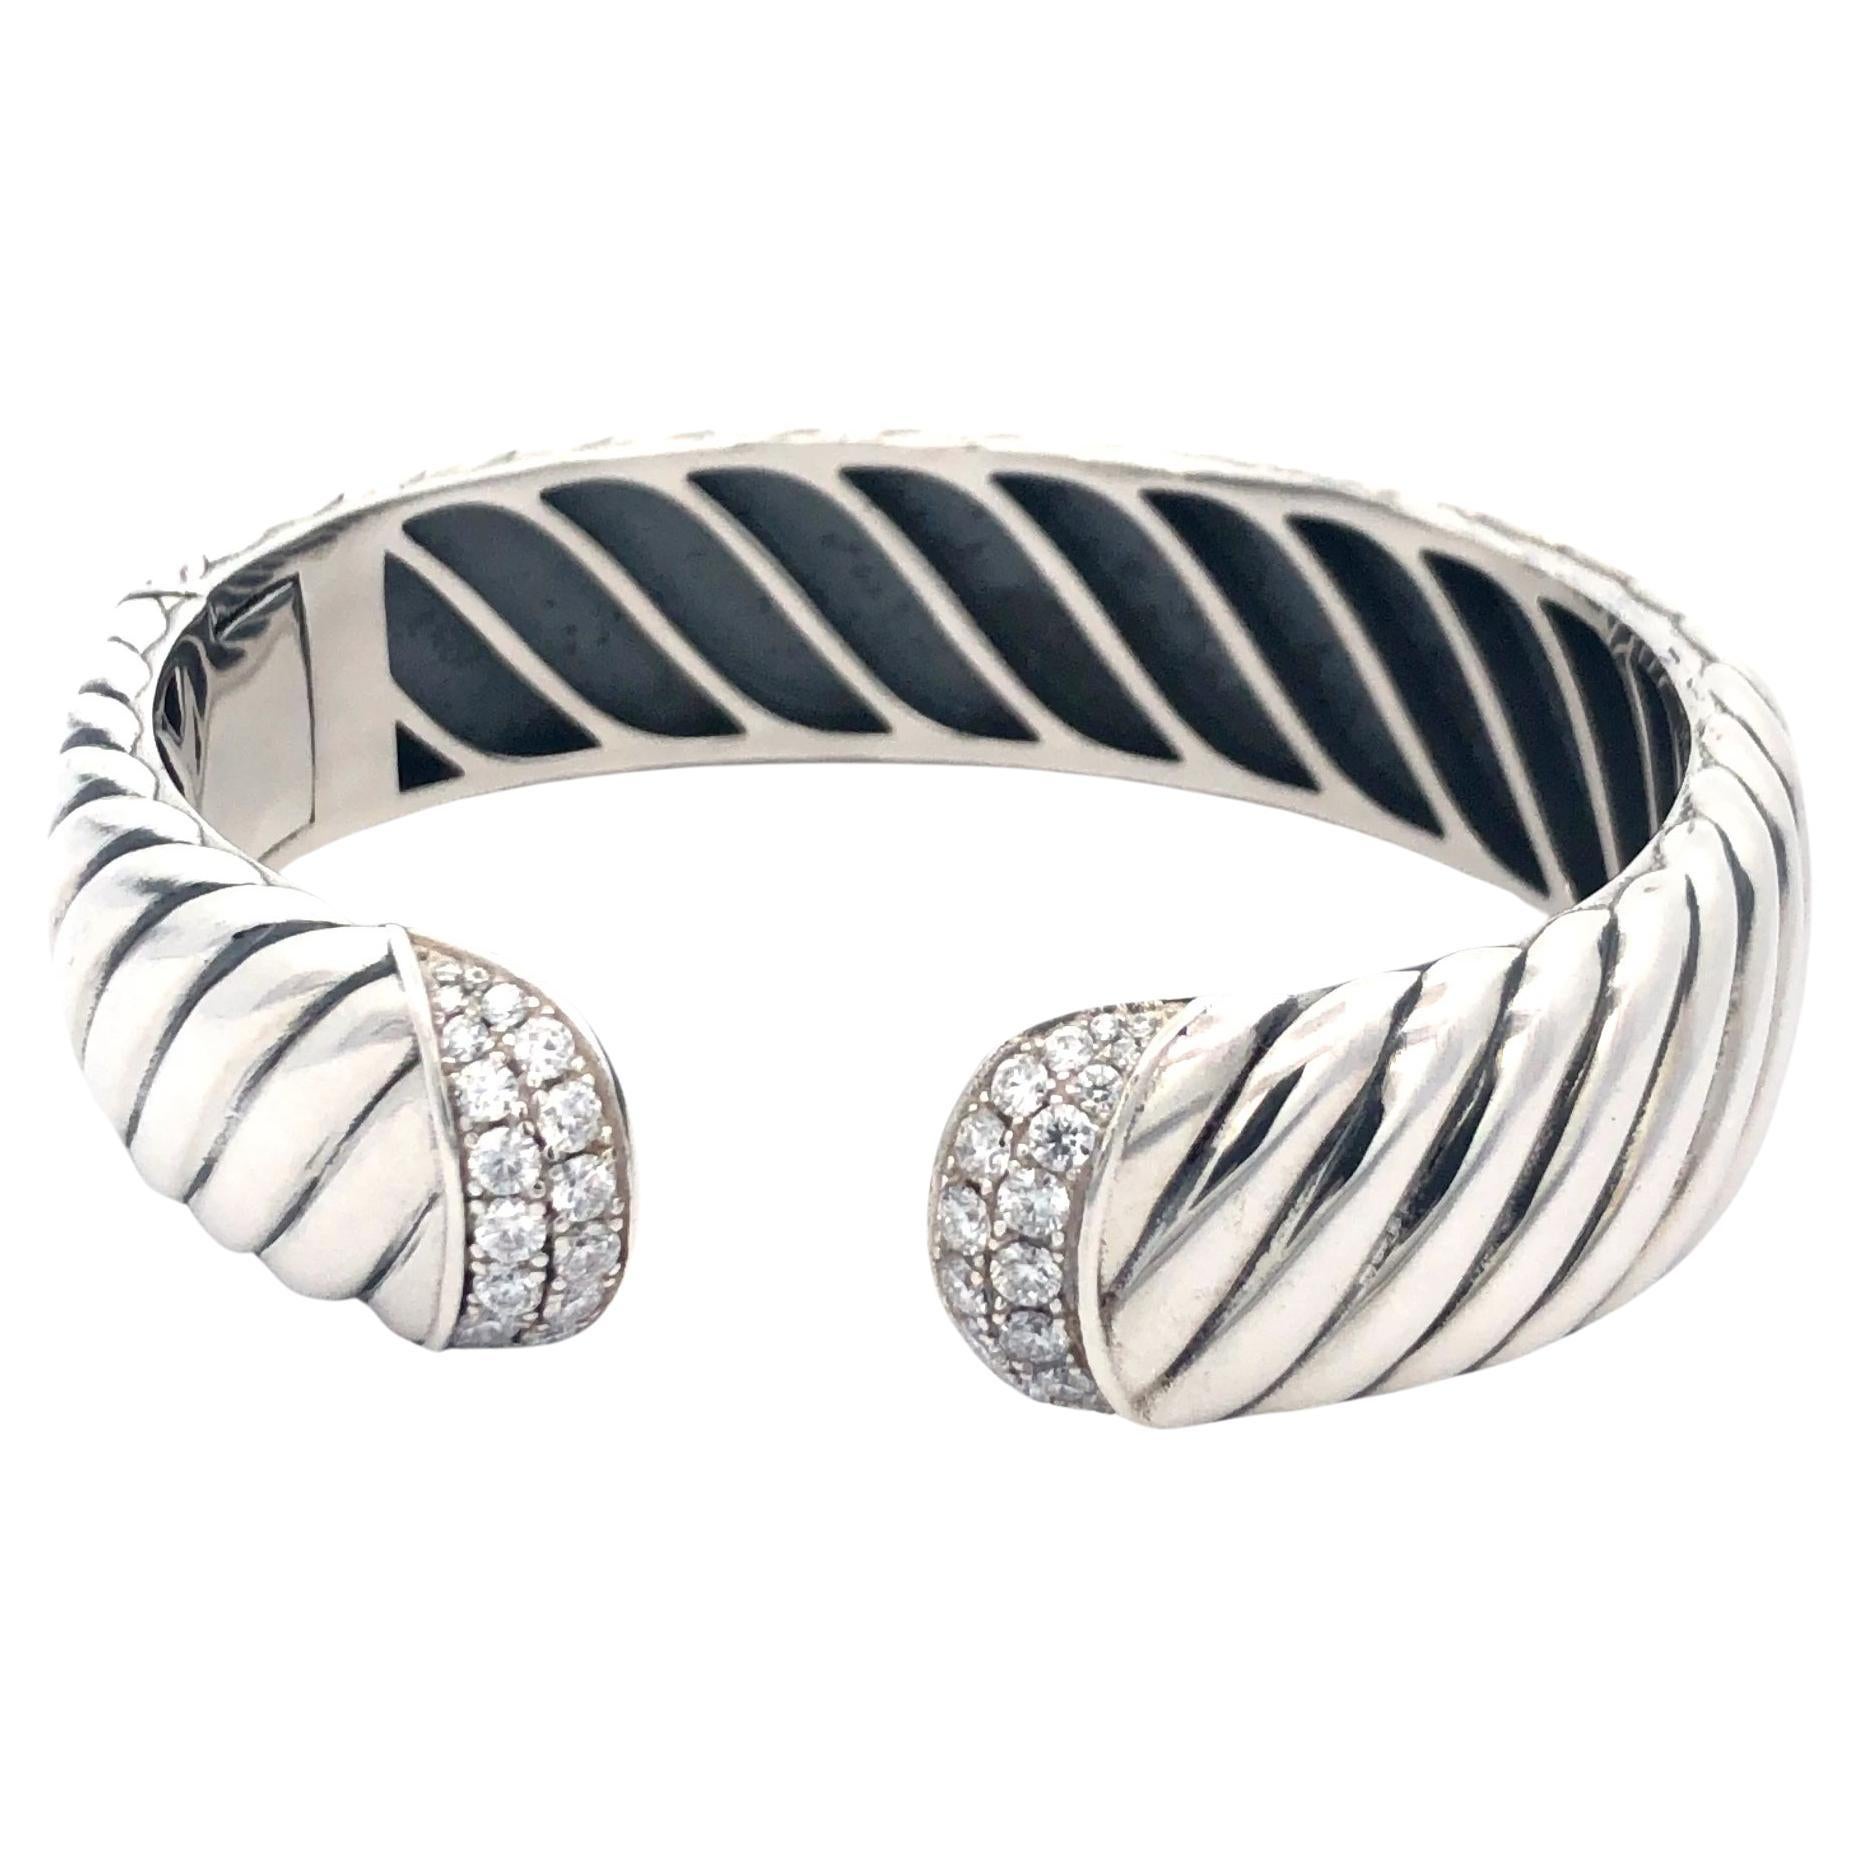 David Yurman Bangle Bracelet With Diamond Tips in Sterling Silver